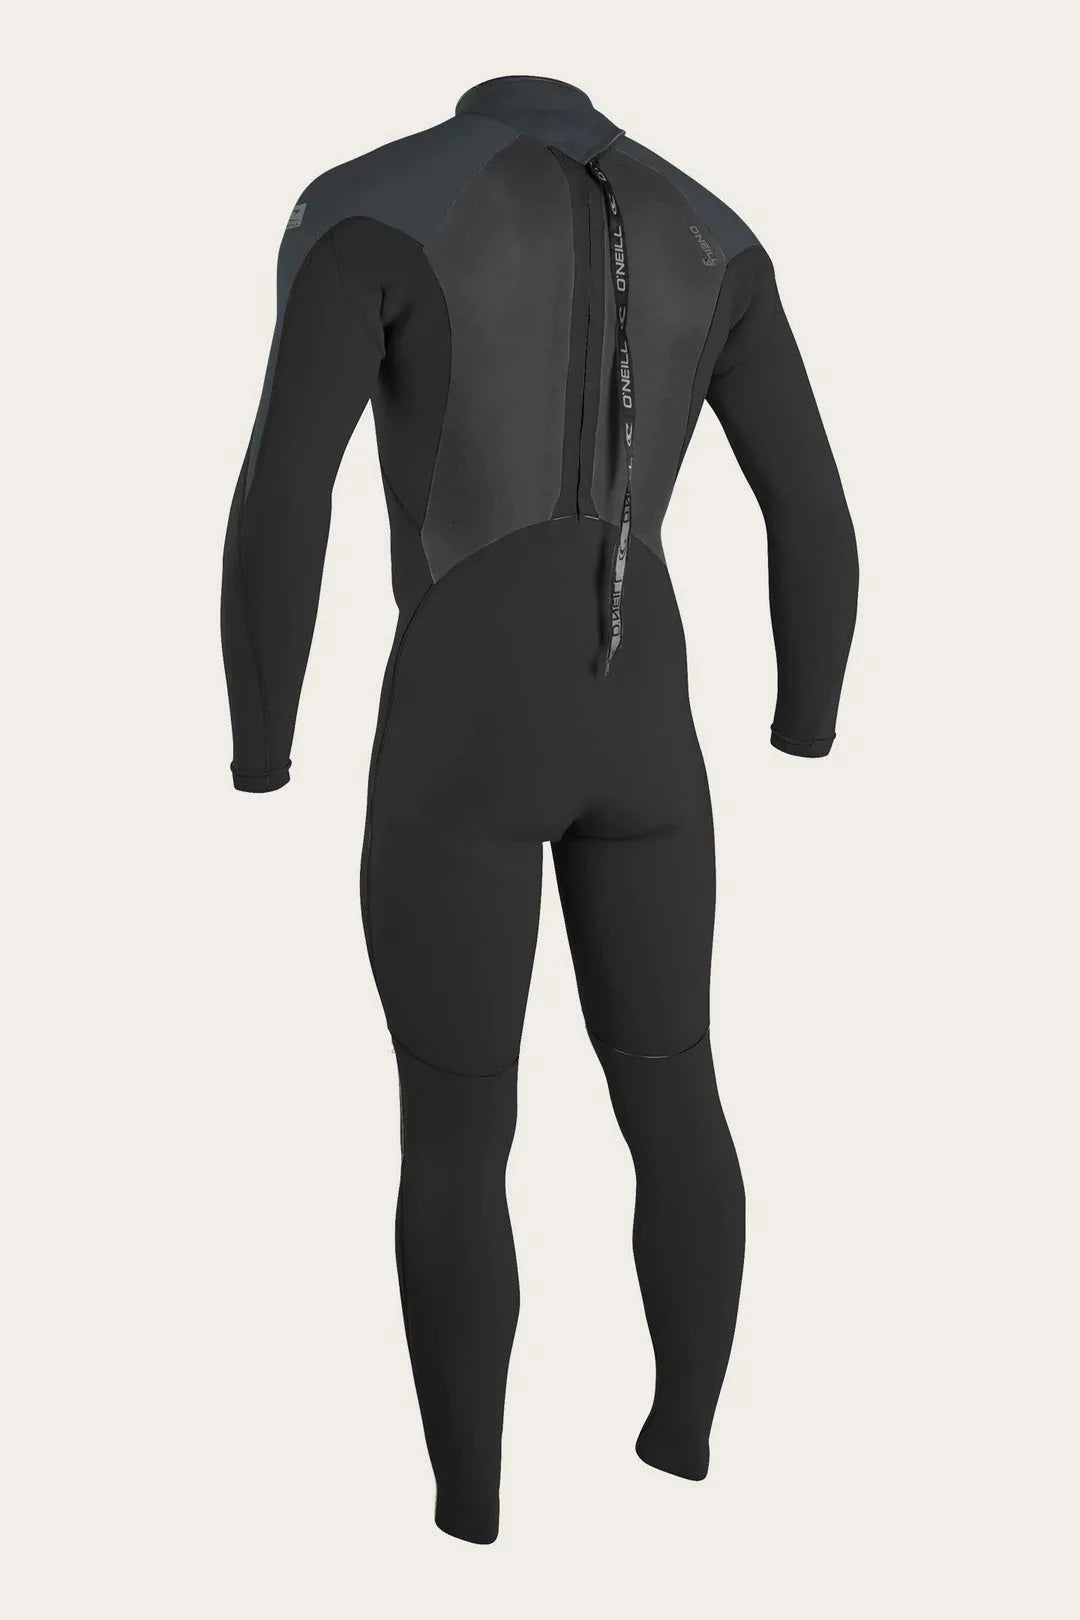 4/3 Epic Back Zip-O'Neill-back zip,black,entry level,epic,fullsuit,o'neill,oneill wetsuit,wetsuit